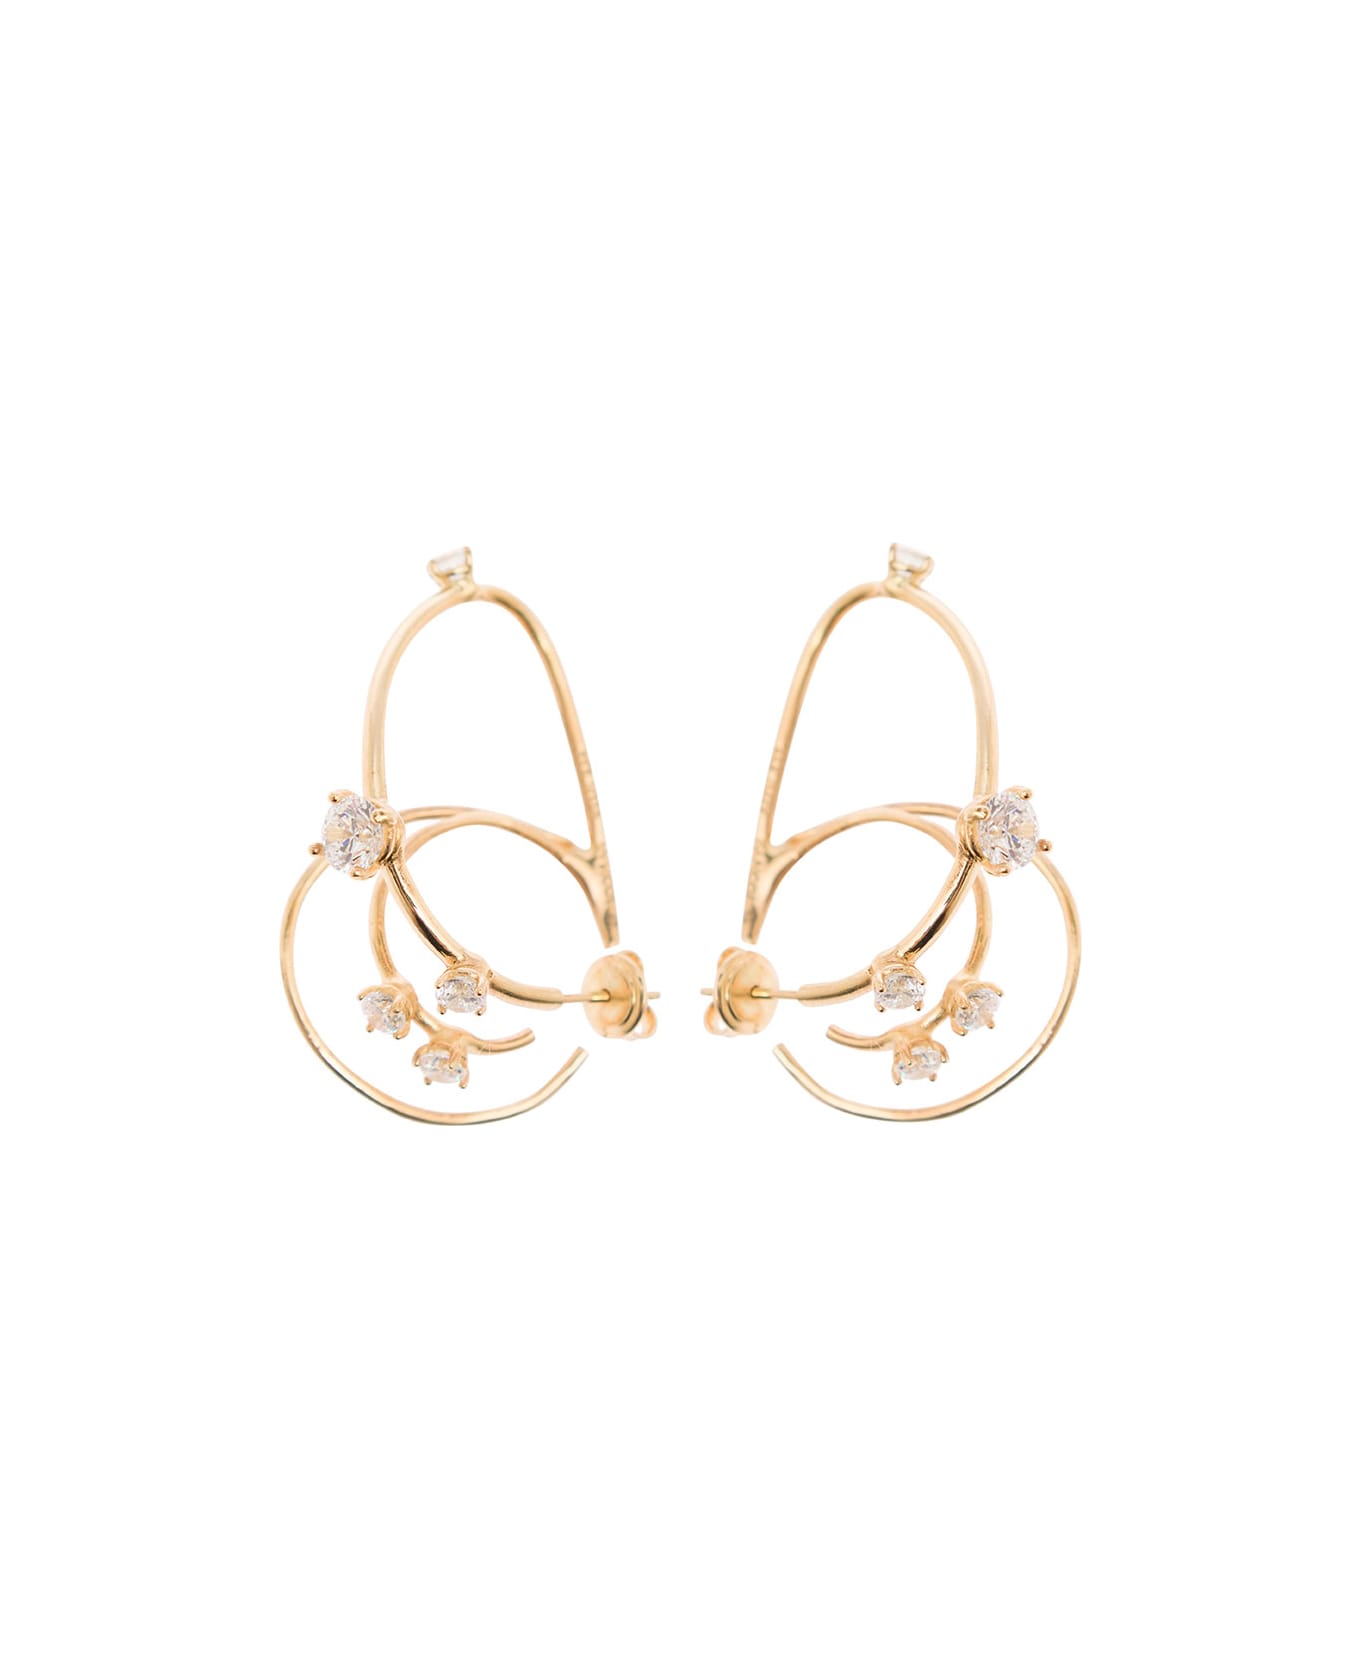 Panconesi 'constellation' Gold-colored Multi Hoops Earrings In Sterling Silver Woman - Metallic